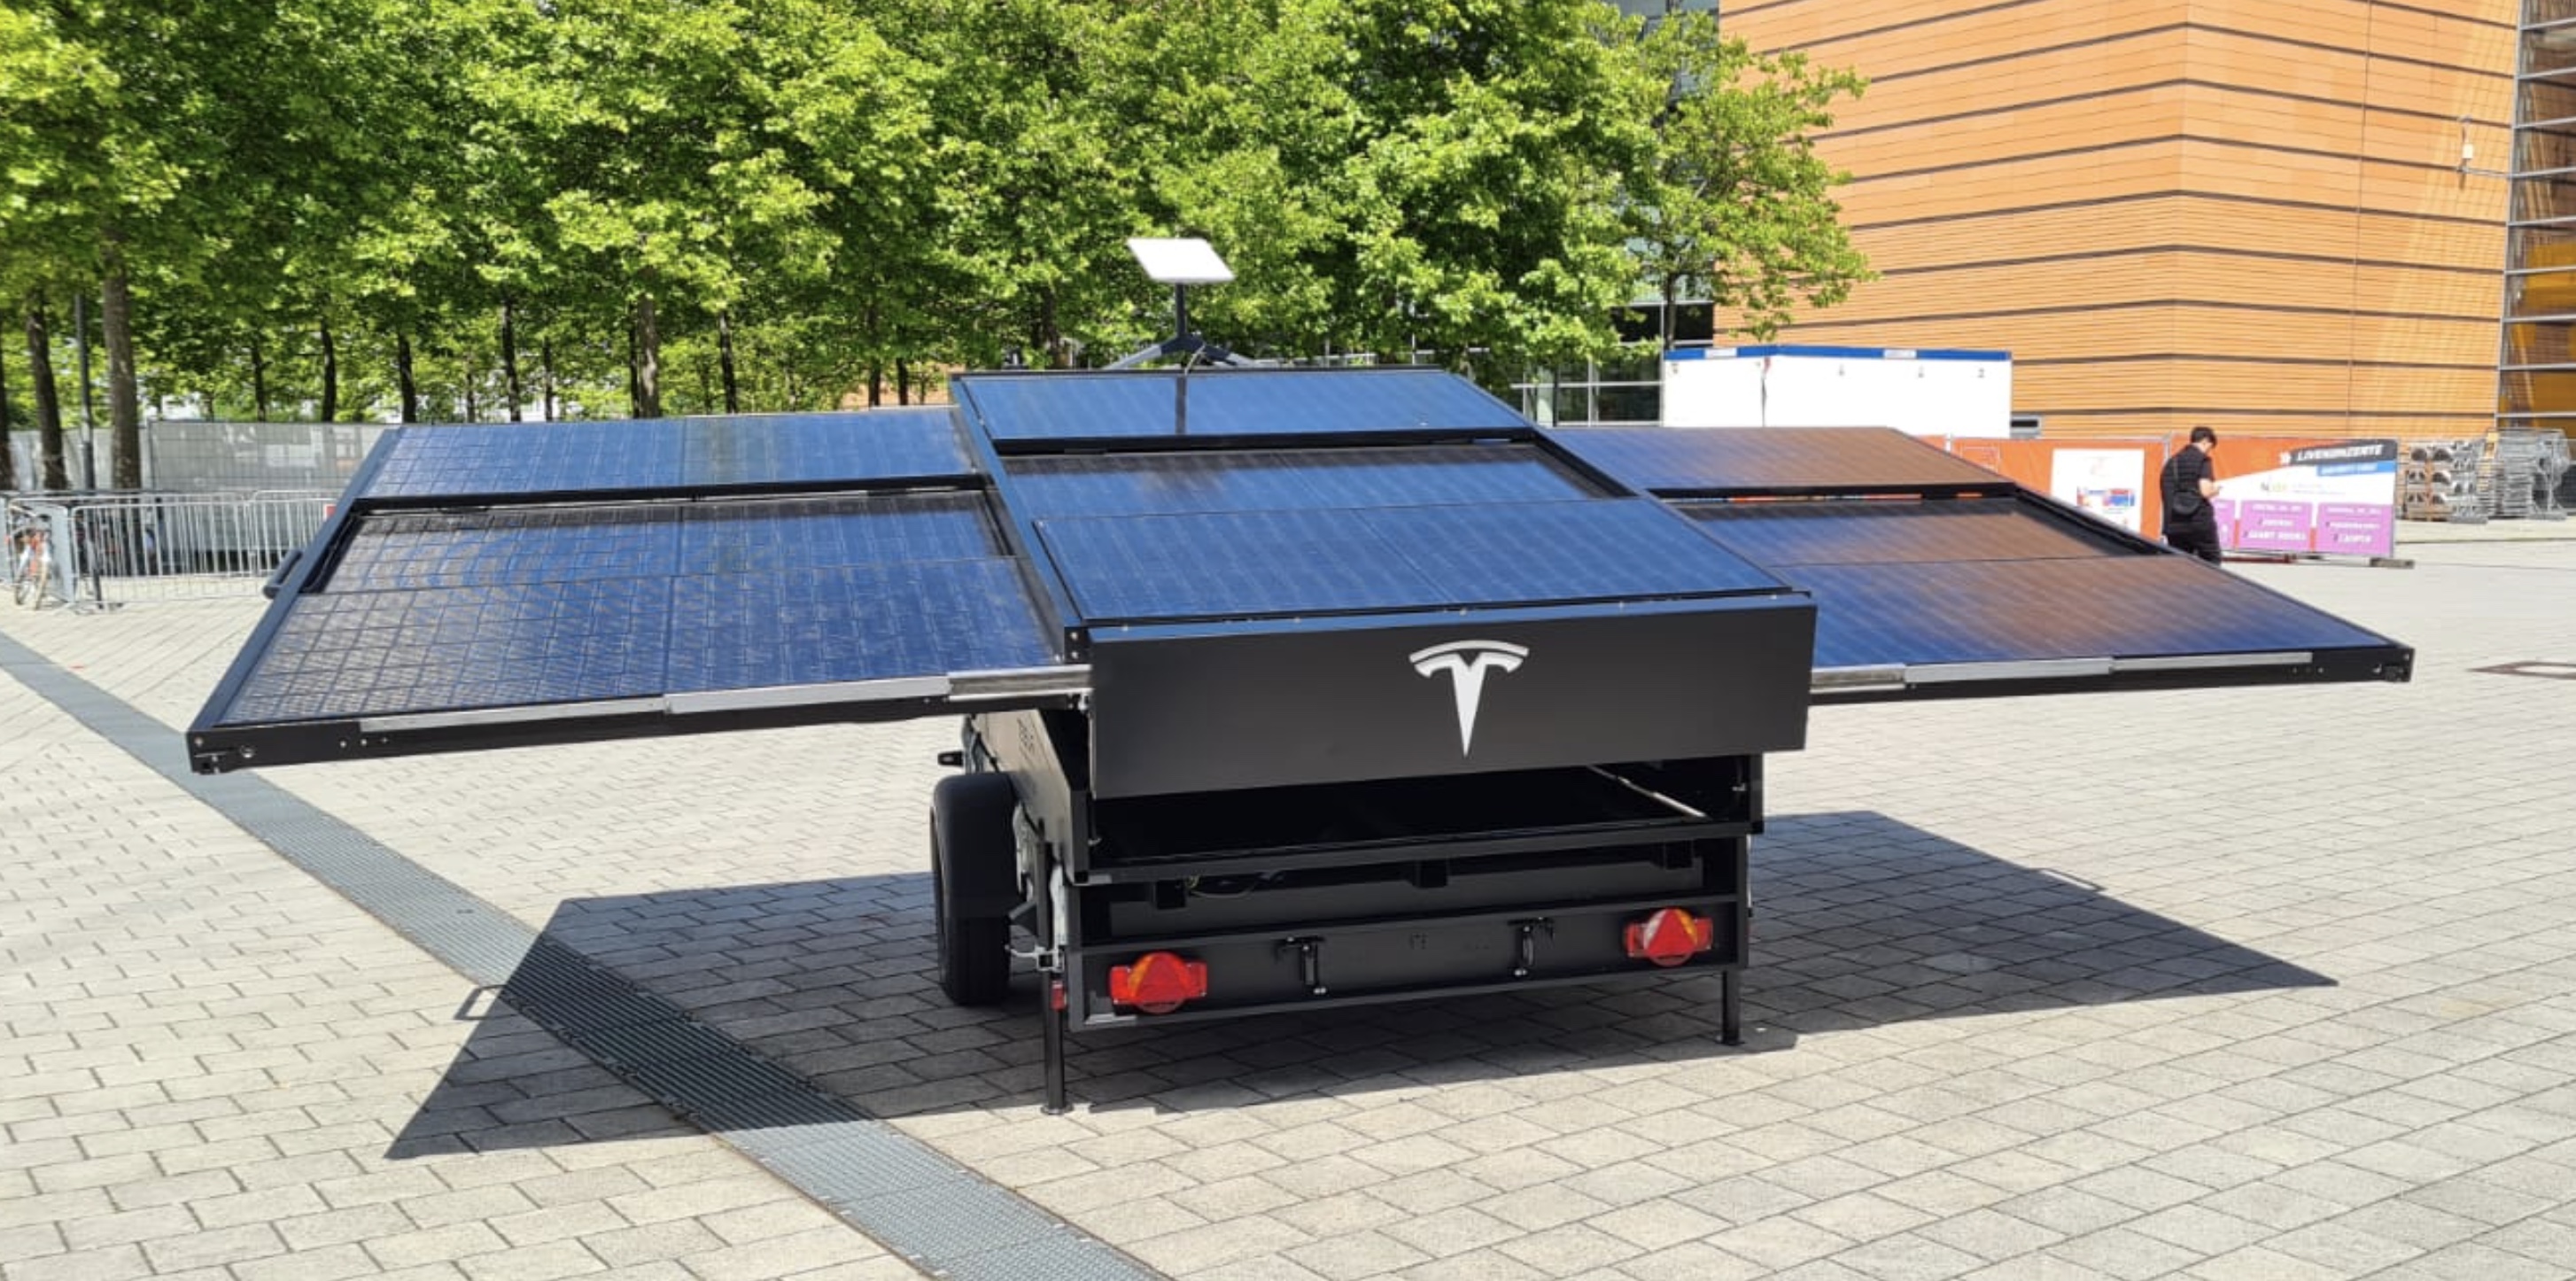 https://electrek.co/wp-content/uploads/sites/3/2022/07/Tesla-Solar-Range-extender-trailer.jpg?quality=82&strip=all